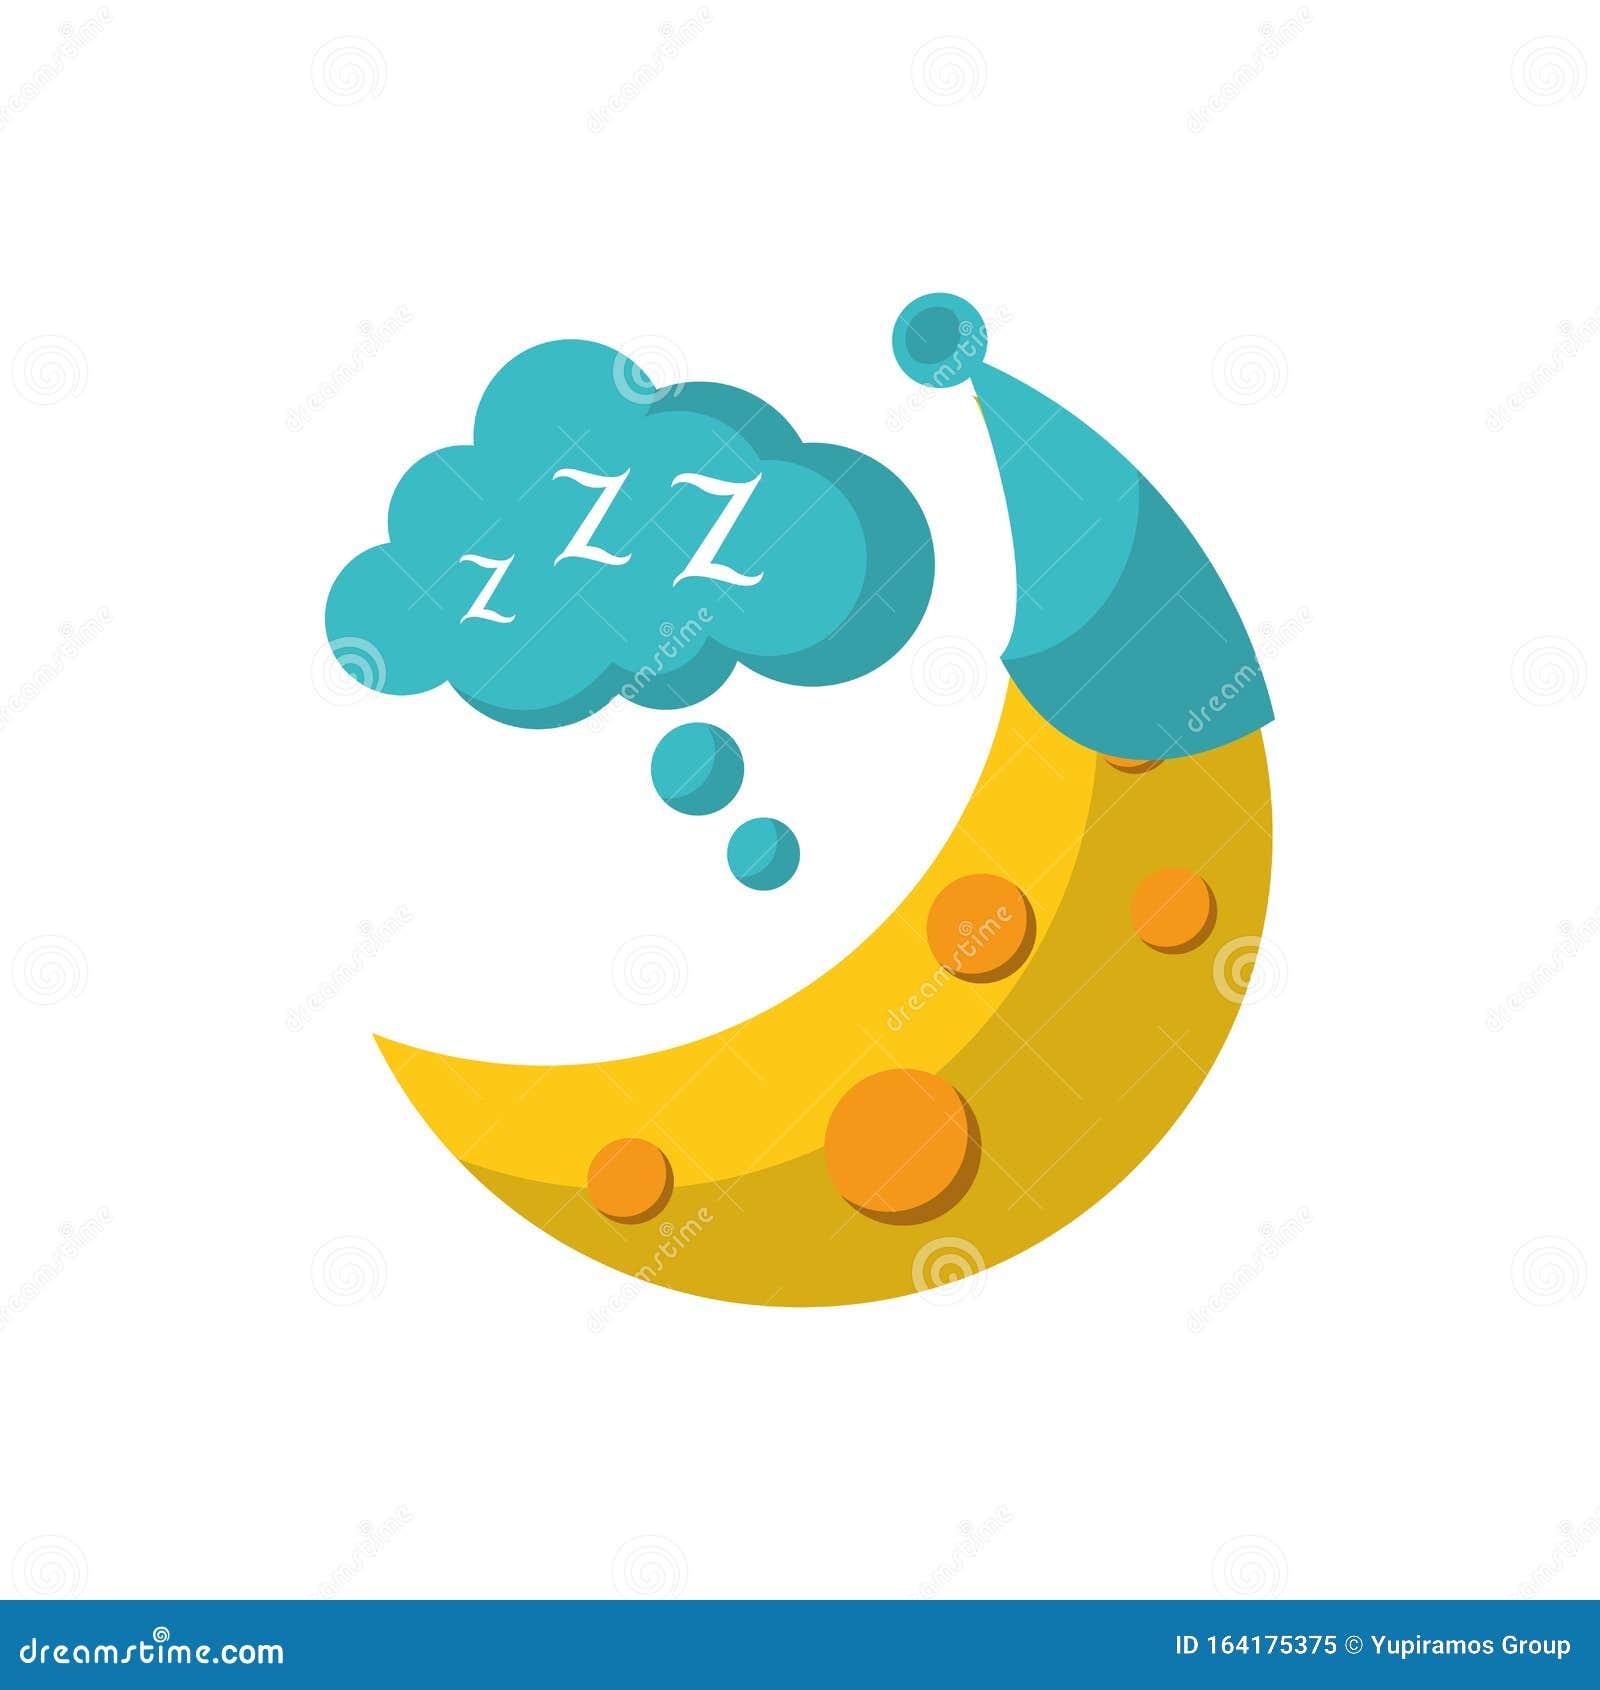 Half Moon with Hat Sleeping Flat Icon Image Stock Vector - Illustration ...